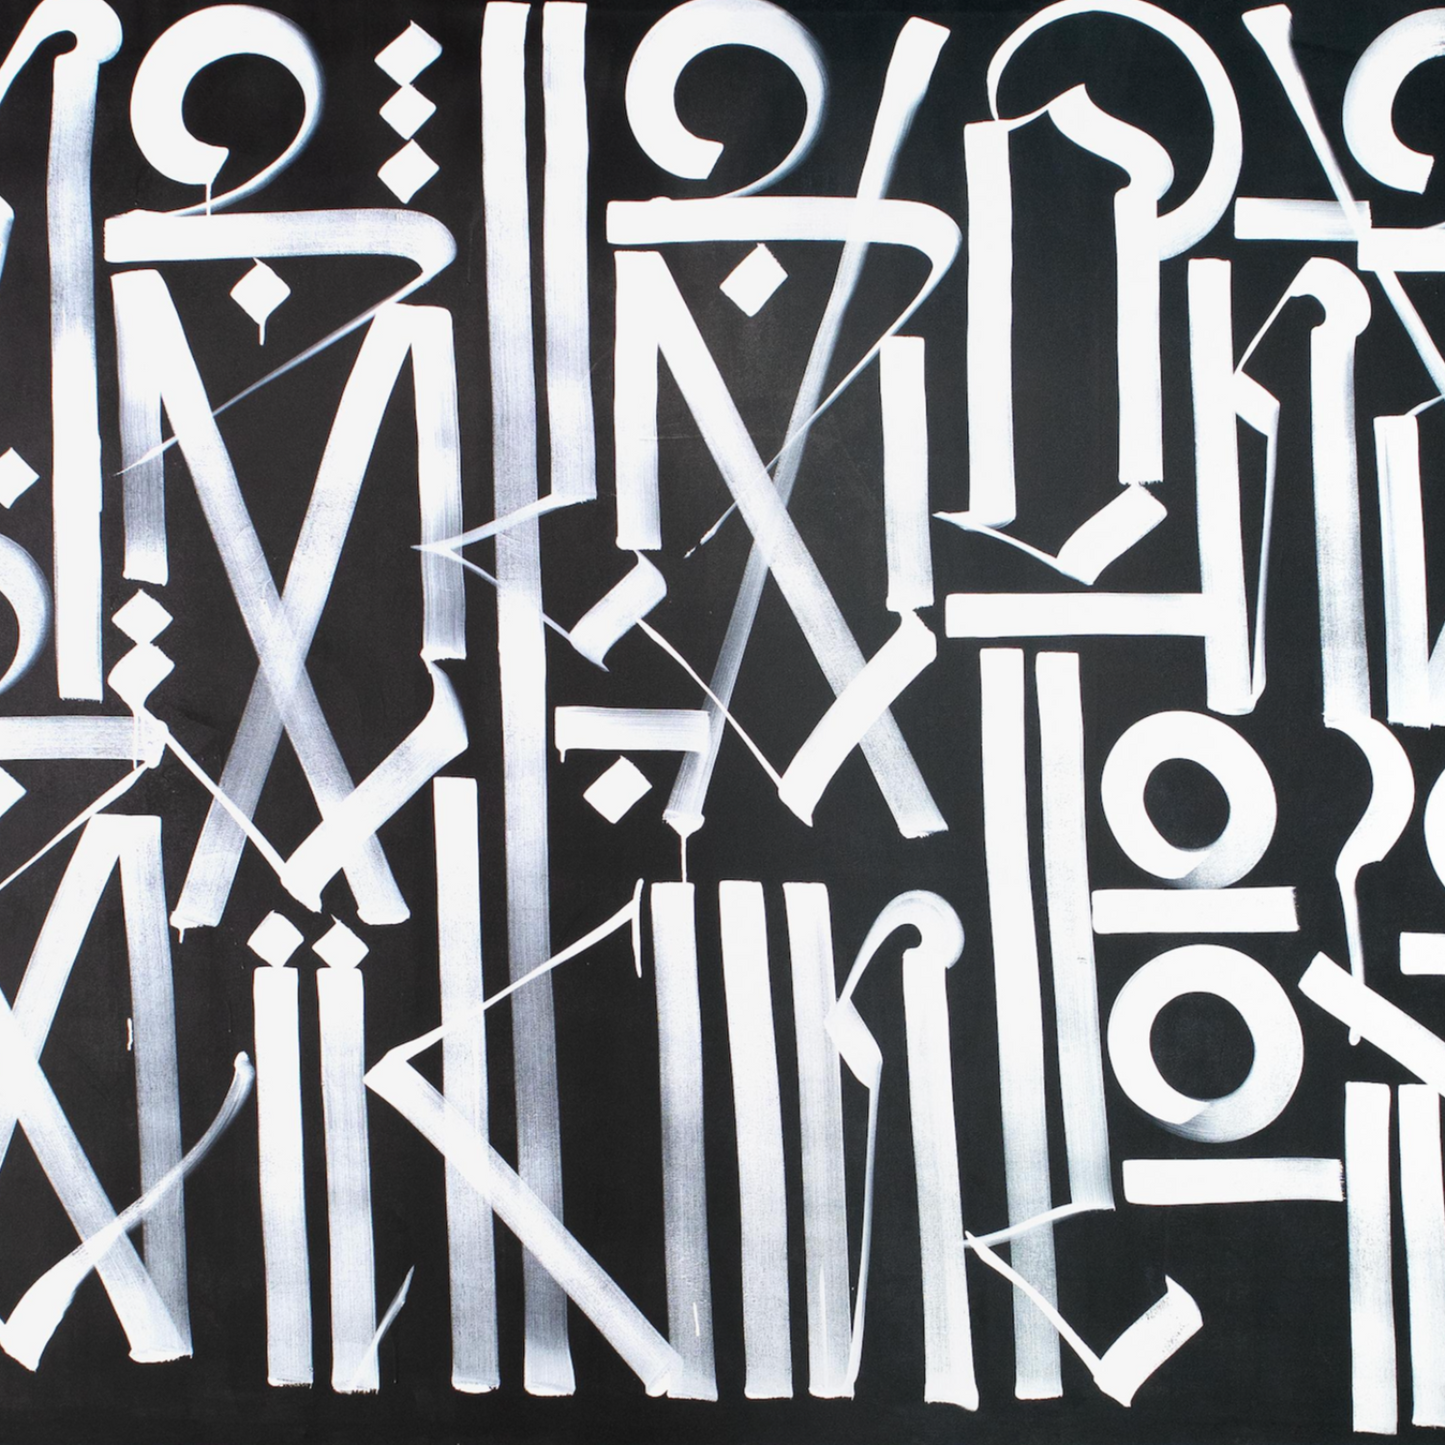 Monochromatic Retna-Inspired Calligraphic Painting